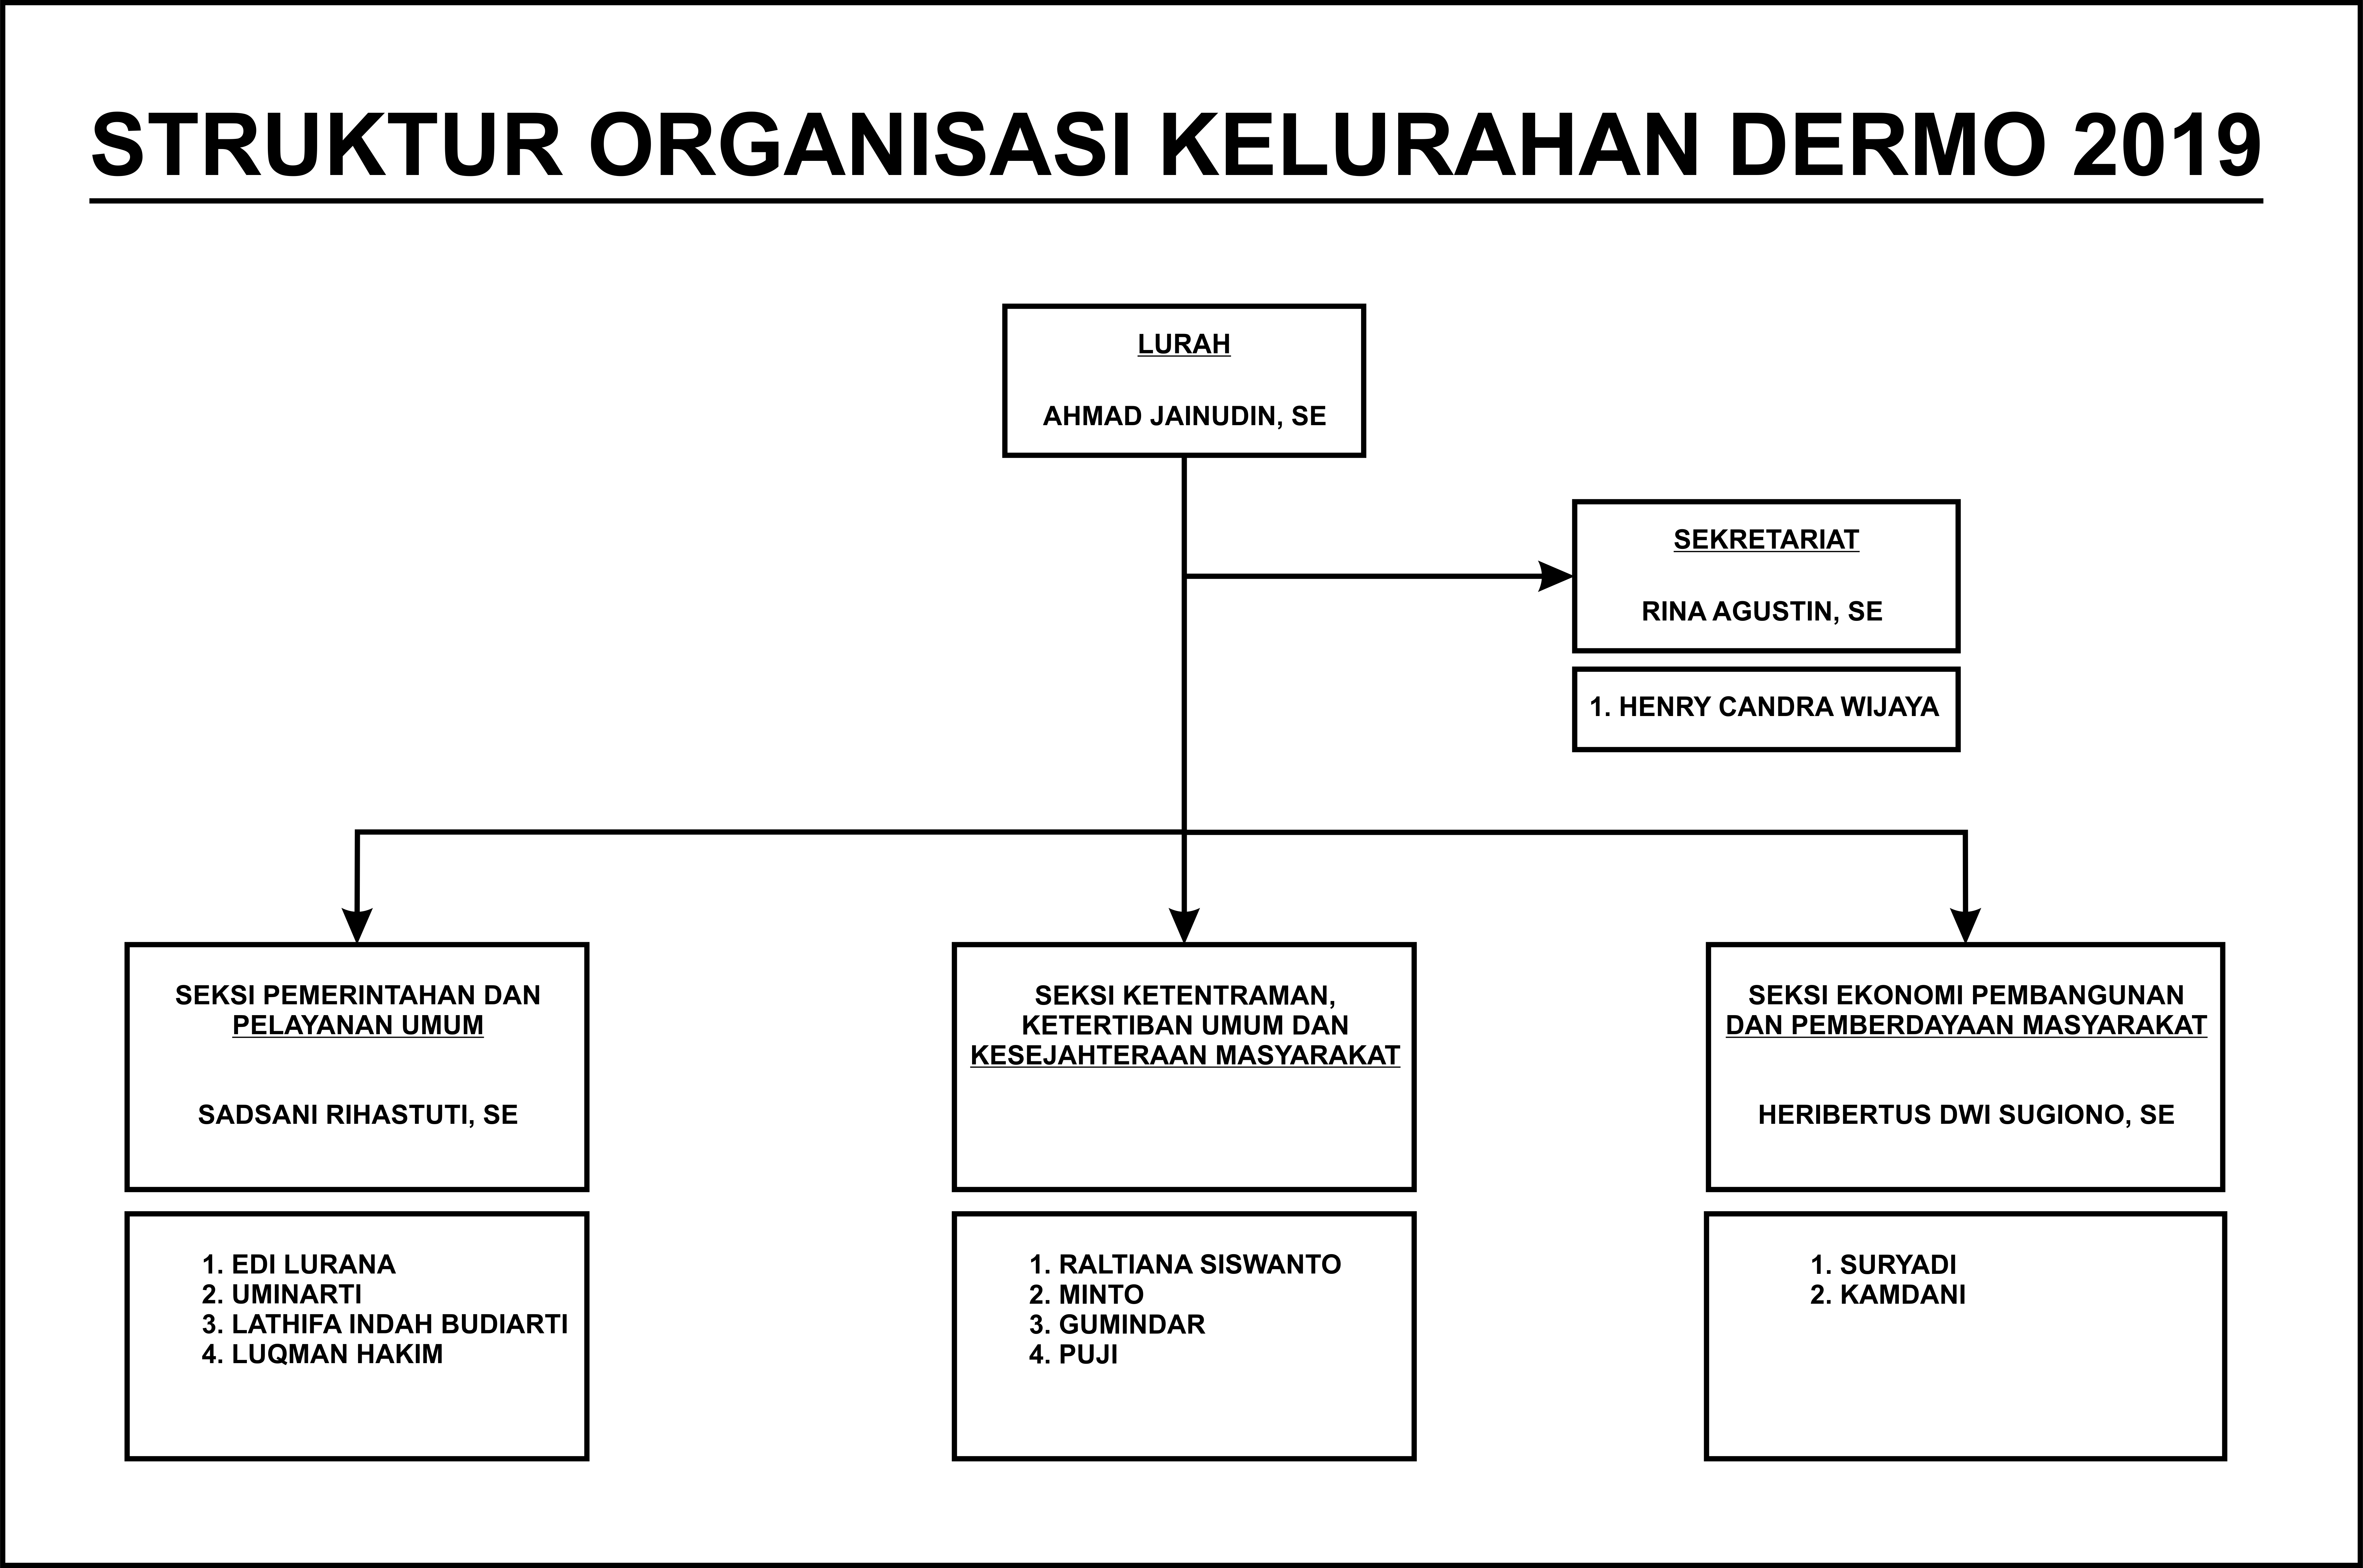 Struktur Organisasi - Kelurahan Dermo